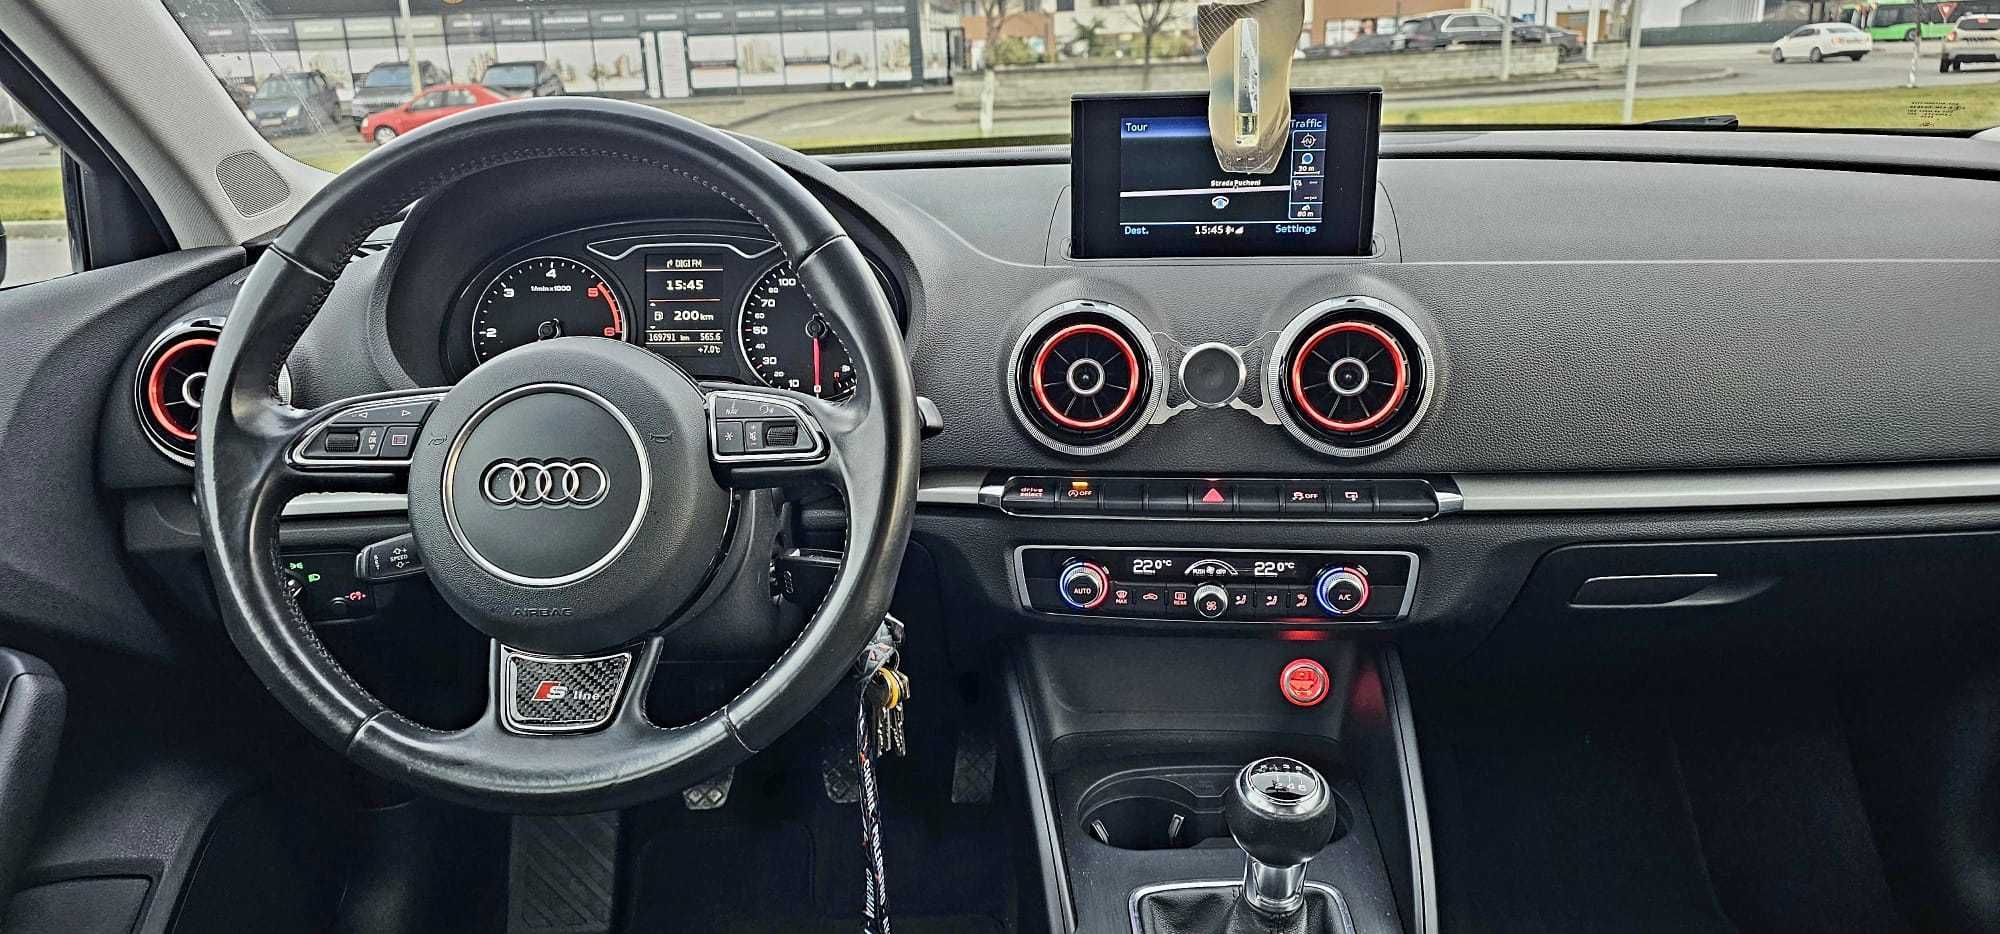 Audi A3 S-Line Berlina/Bi-Xenon/Navigatie/Climatronic/2.0 Tdi 150cp